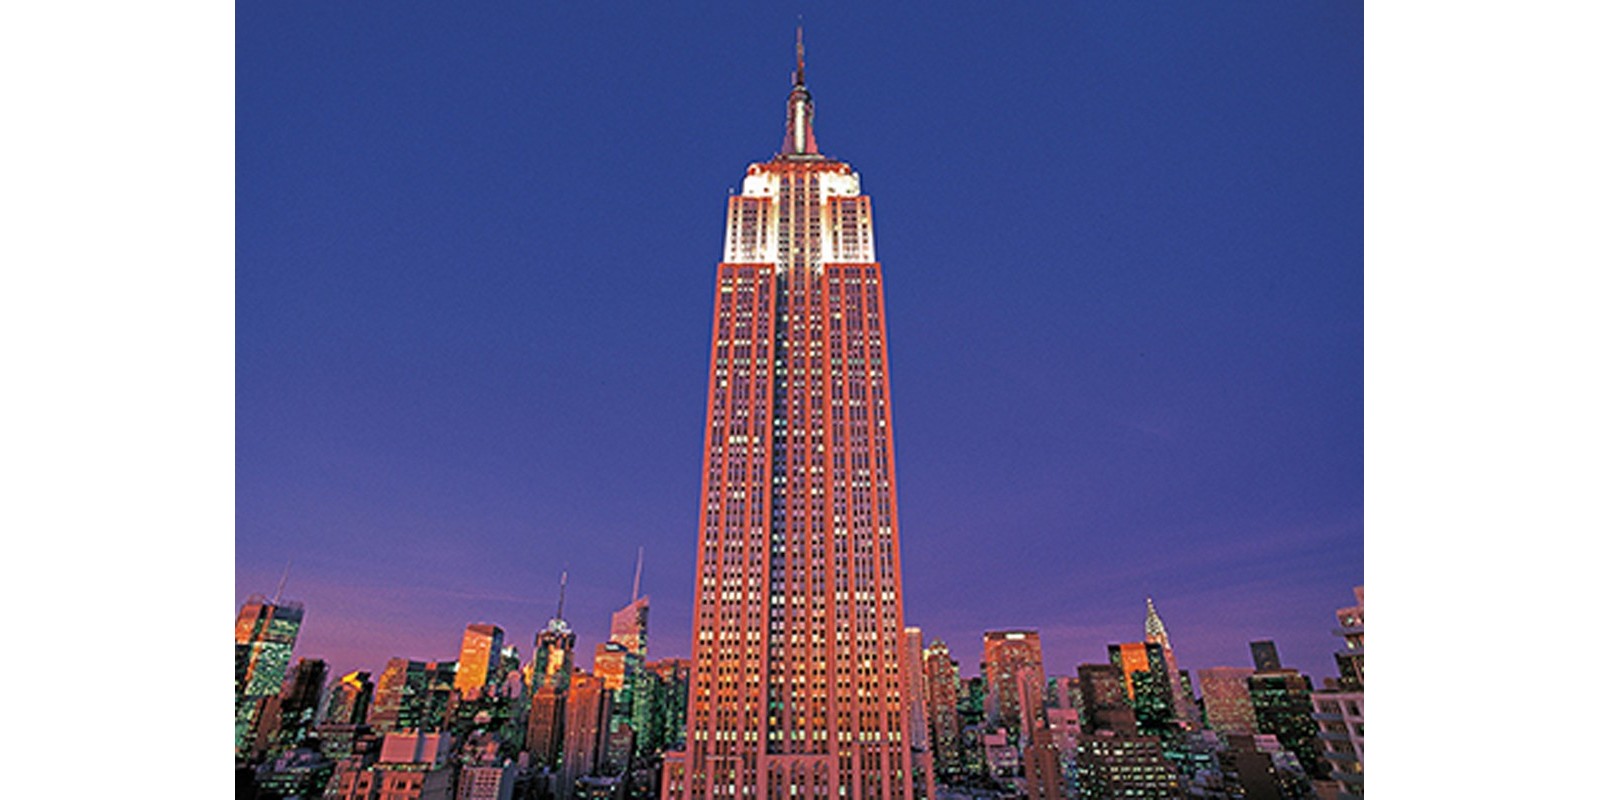 Richard Berenholtz - Empire State Building